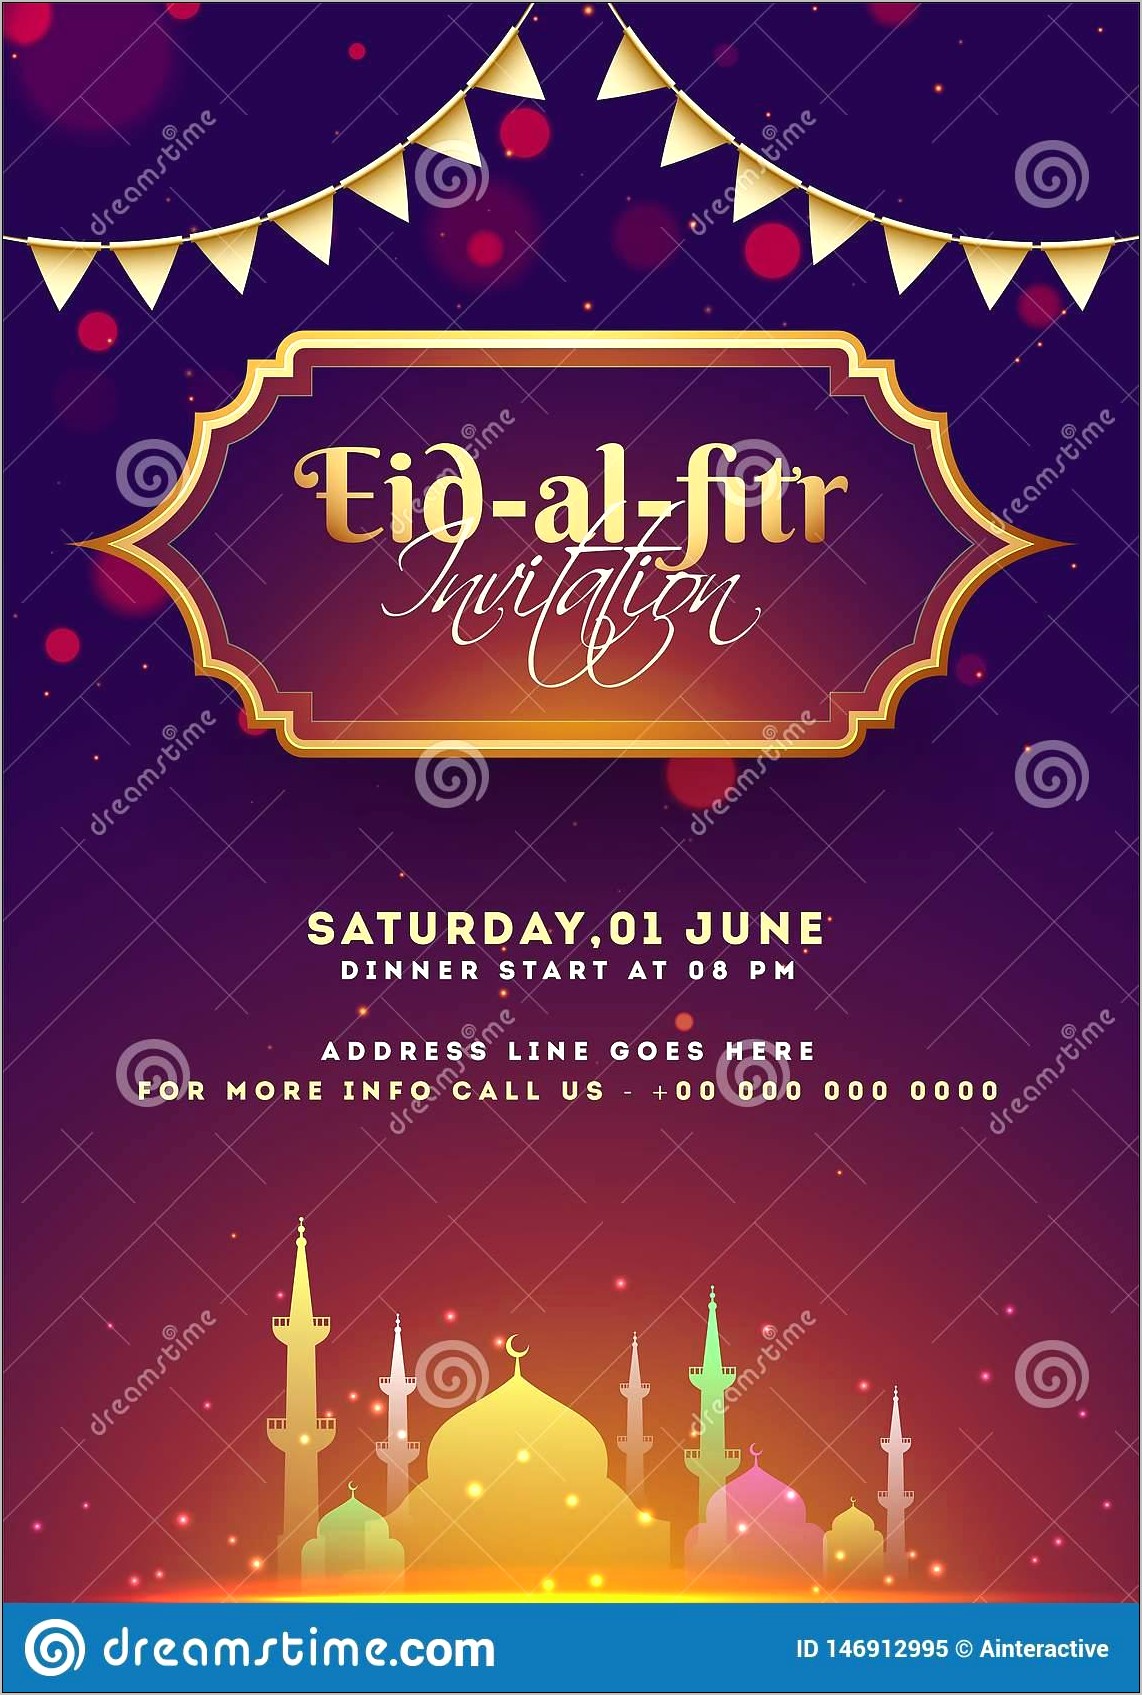 Eid Invitation Card Template Free Download